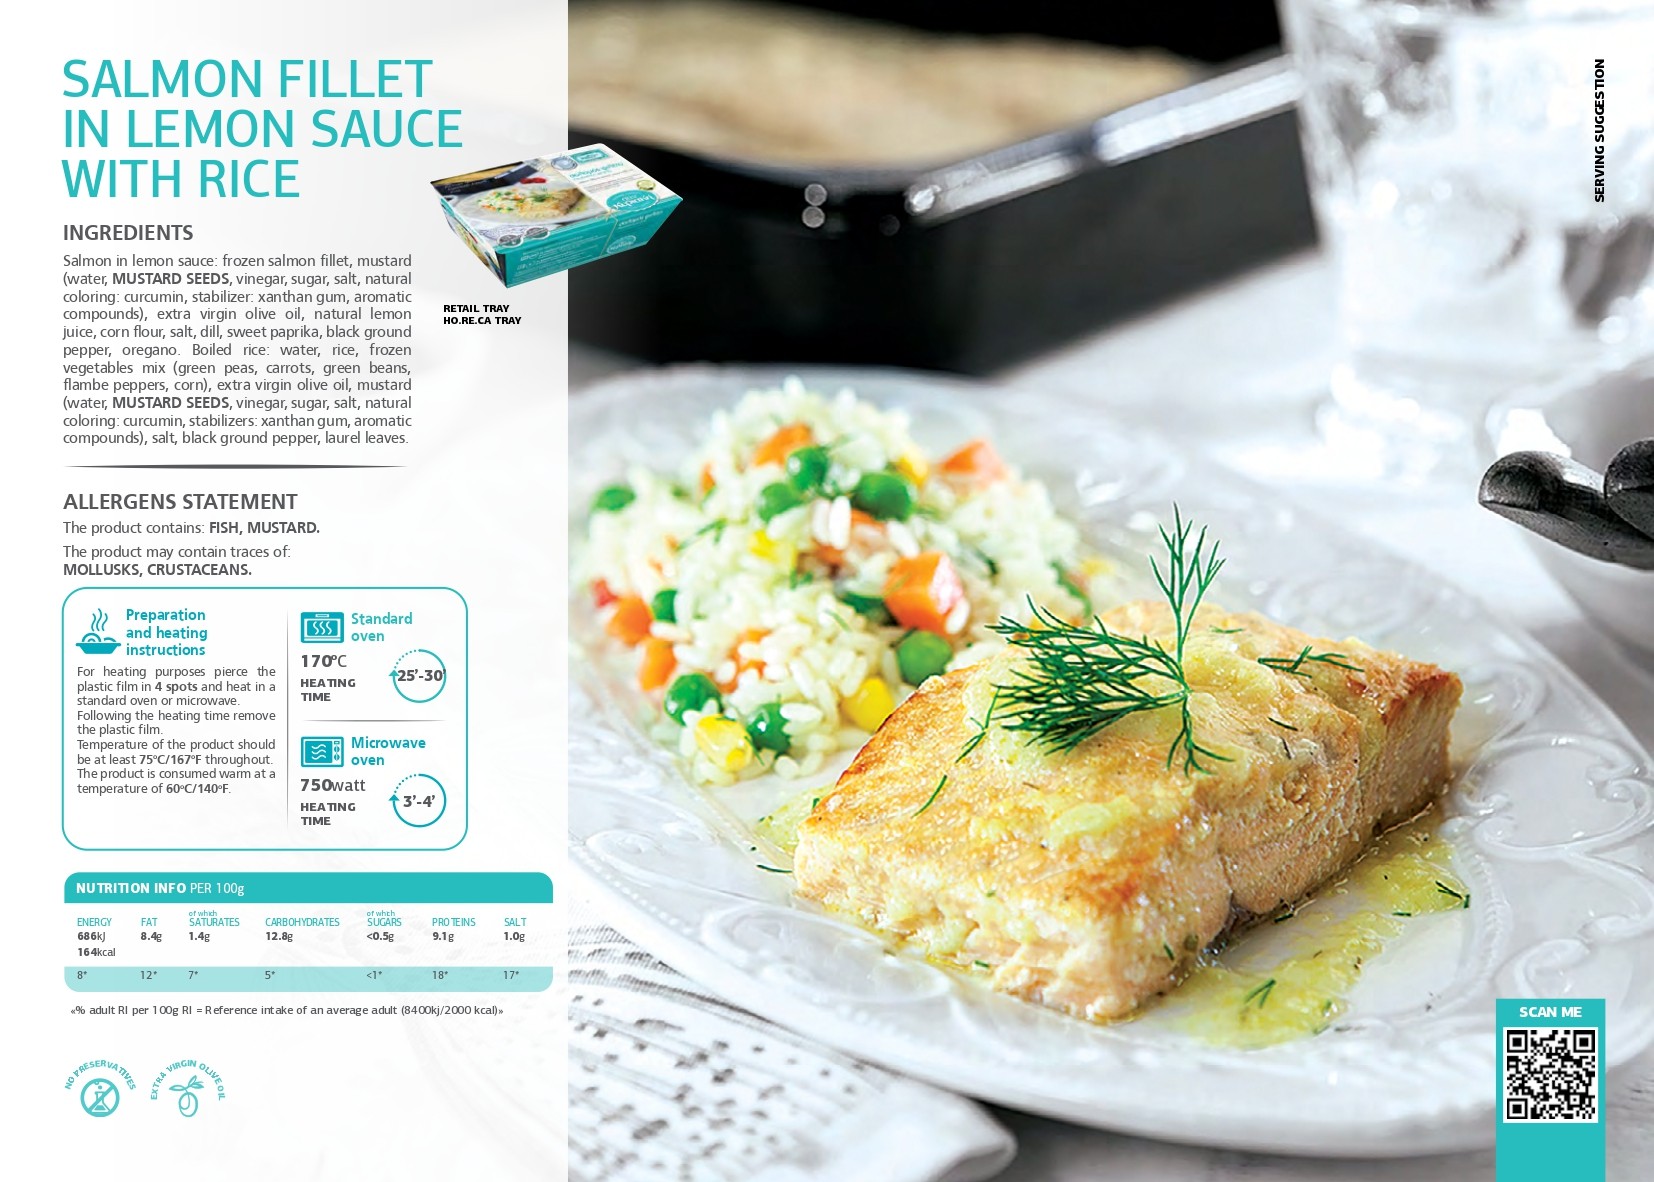 SK - Salmon fillet in lemon sauce with rice pdf image